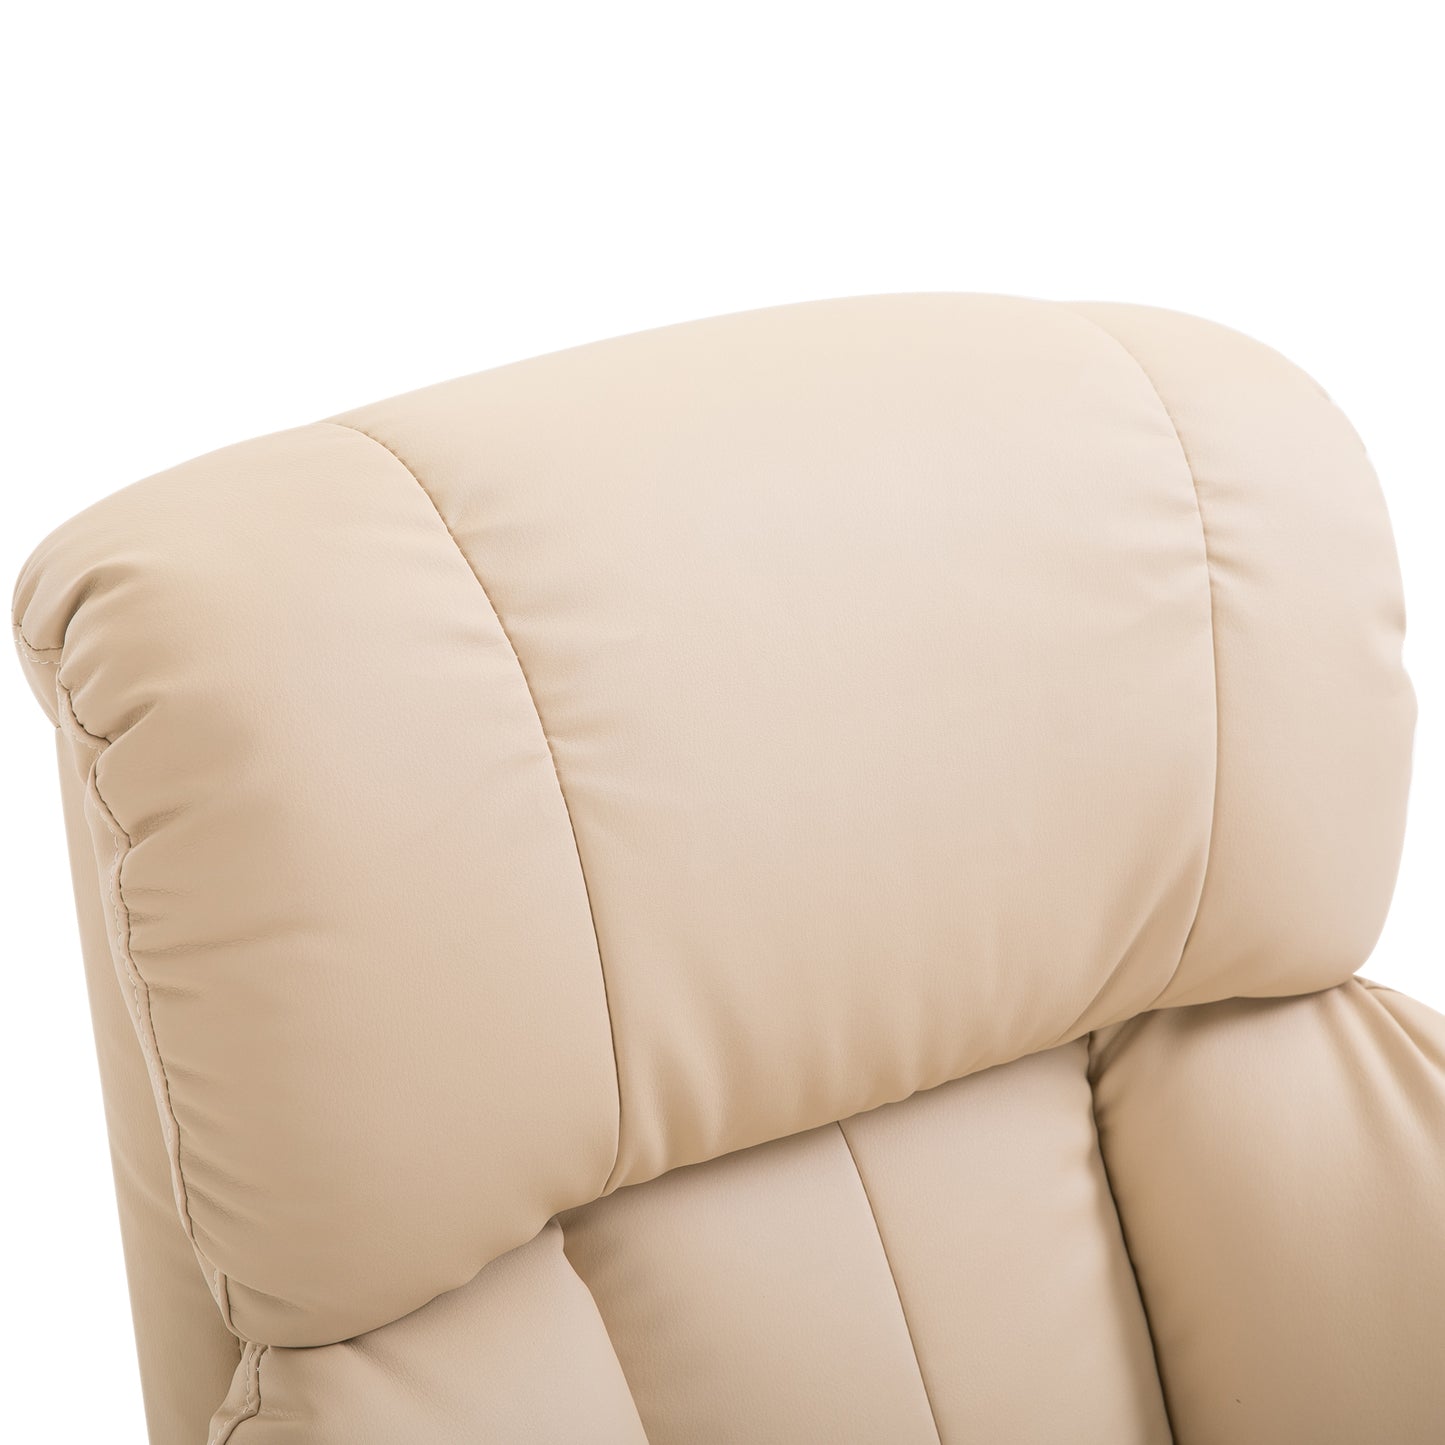 HOMCOM 10 - Point Recliner Massage Chair PU Leather Armchair Chair W/Footstool - Cream